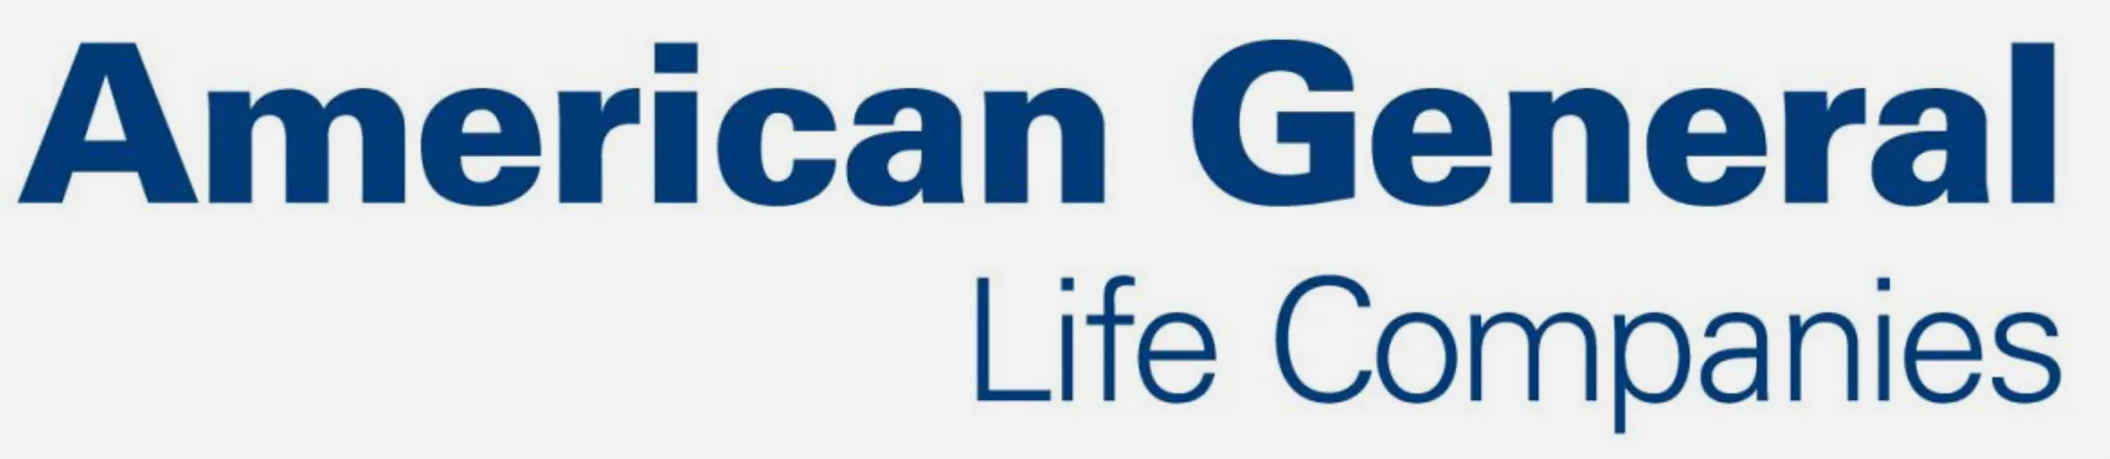 American General Life Companies Logo